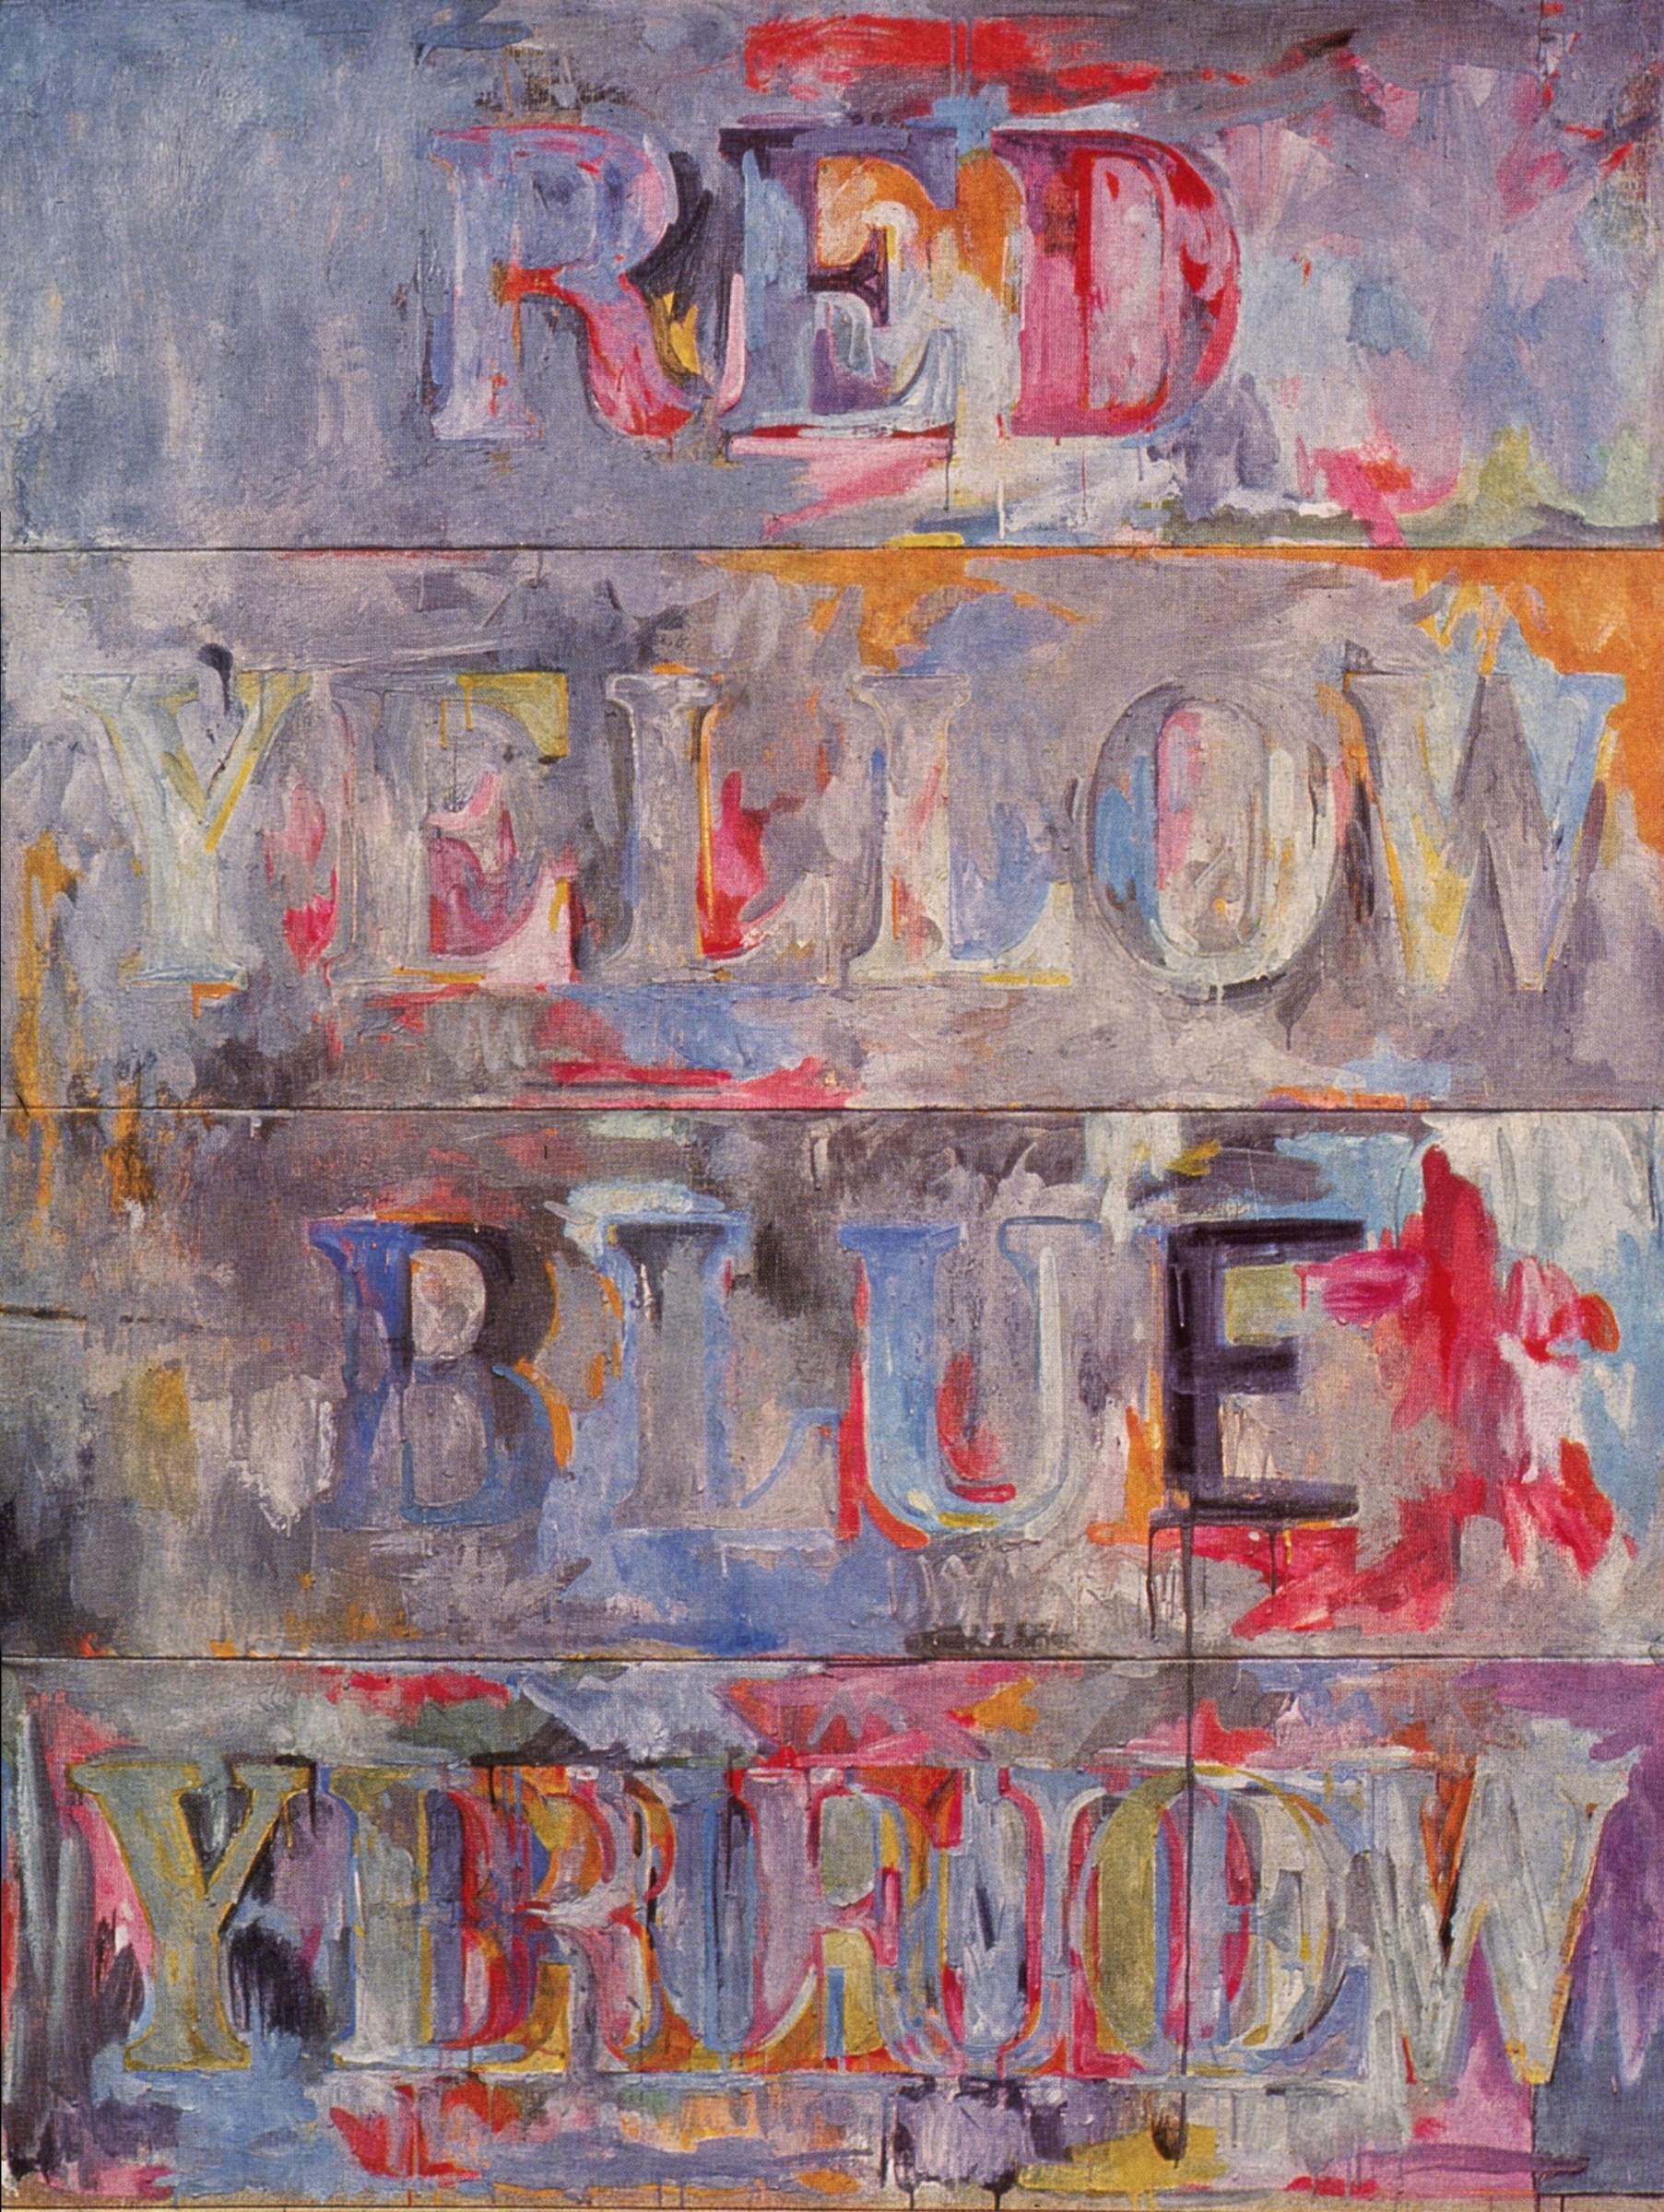 Jasper Johns
By&amp;nbsp;the&amp;nbsp;Sea, 1961
encaustic on canvas
72 x 54 1/2 inches
&amp;nbsp;